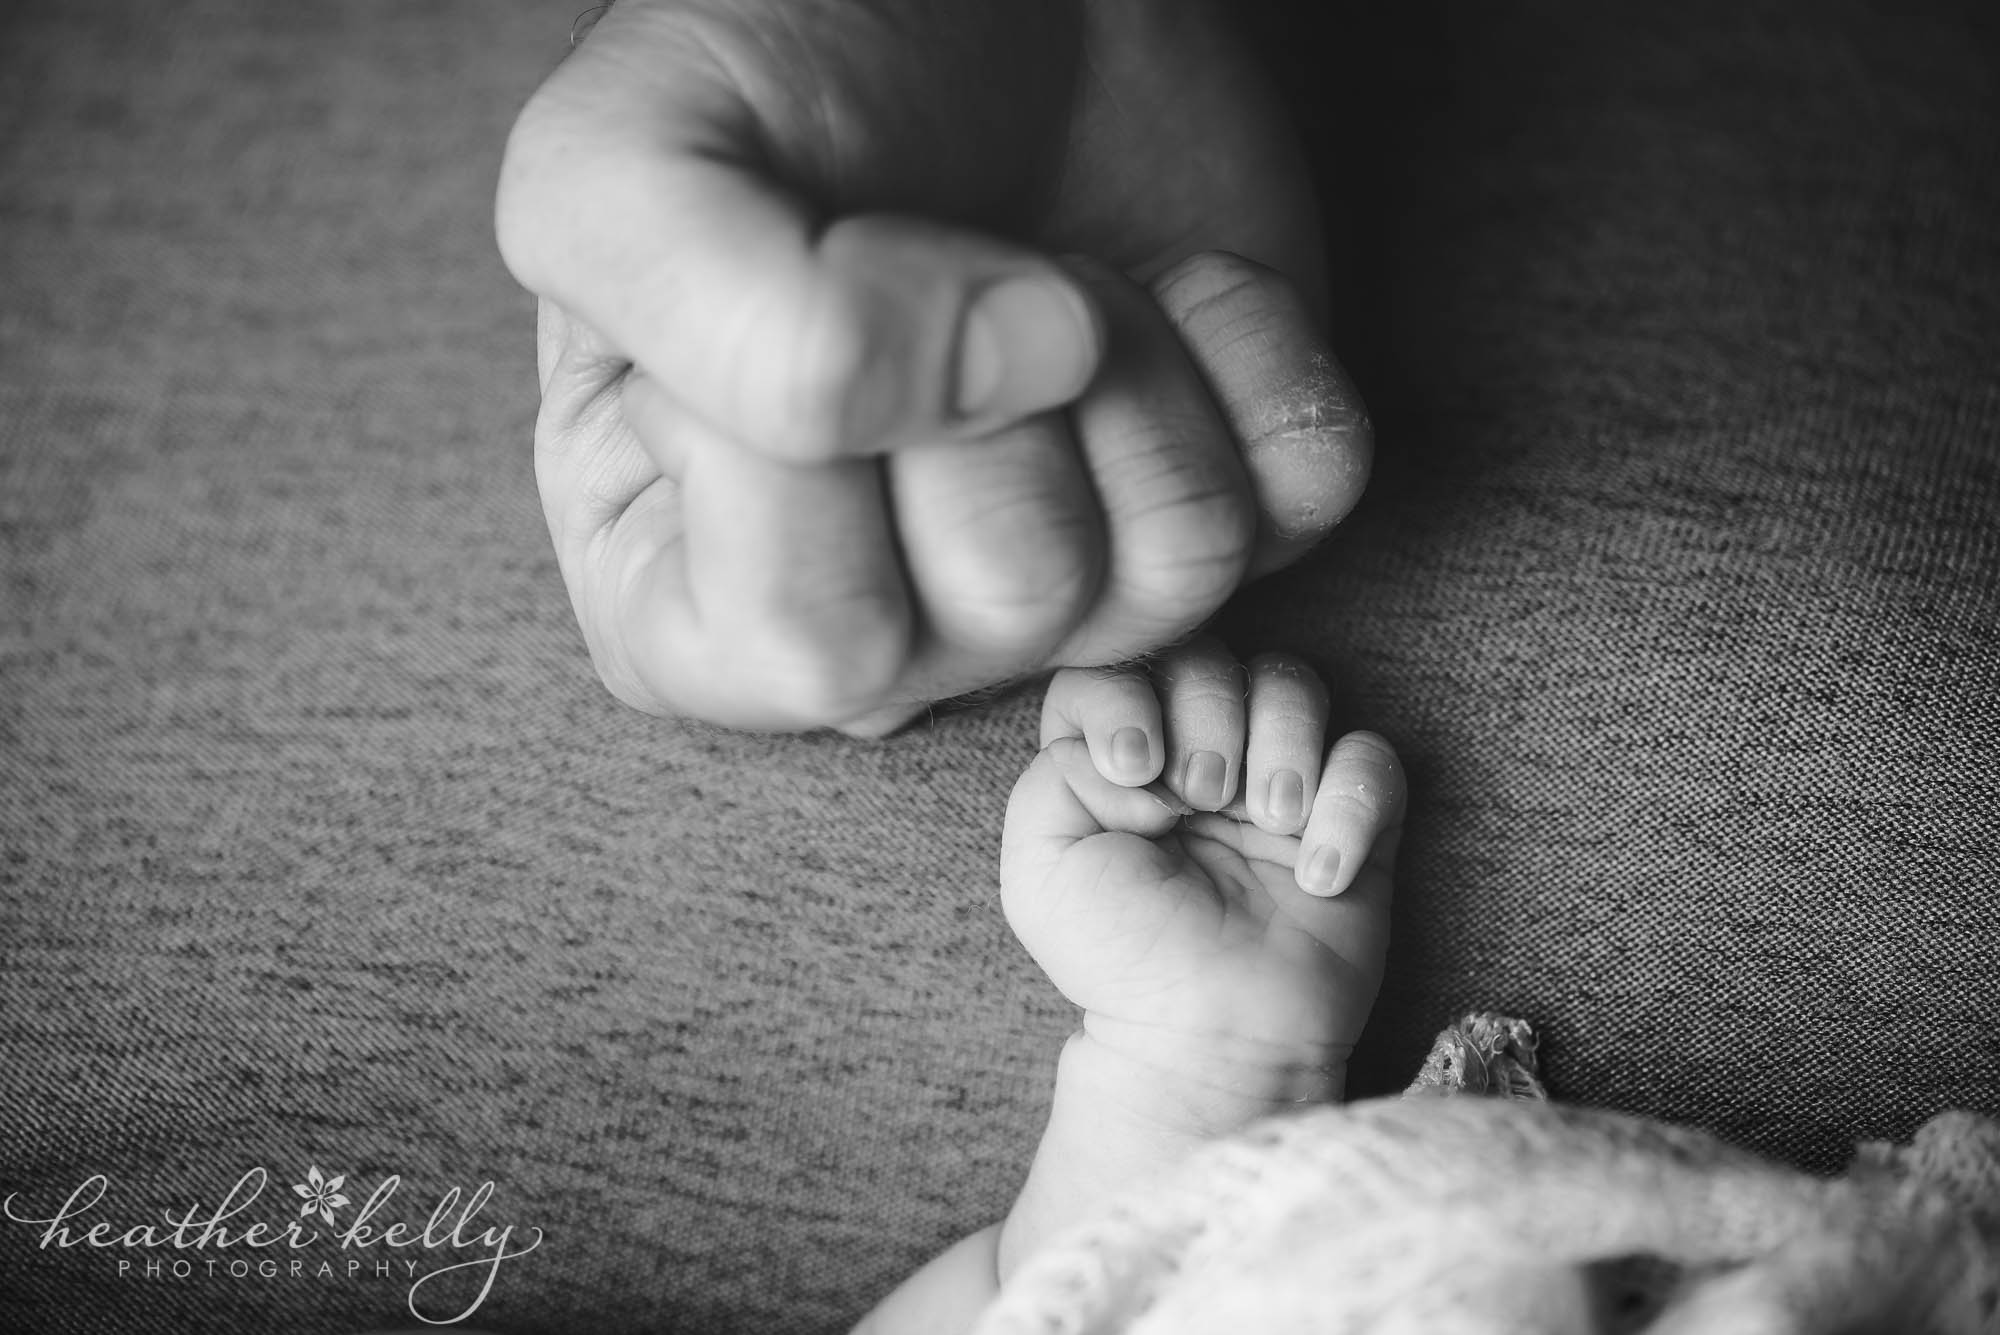 newborn and dad fist bump. ridgefield ct newborn photography